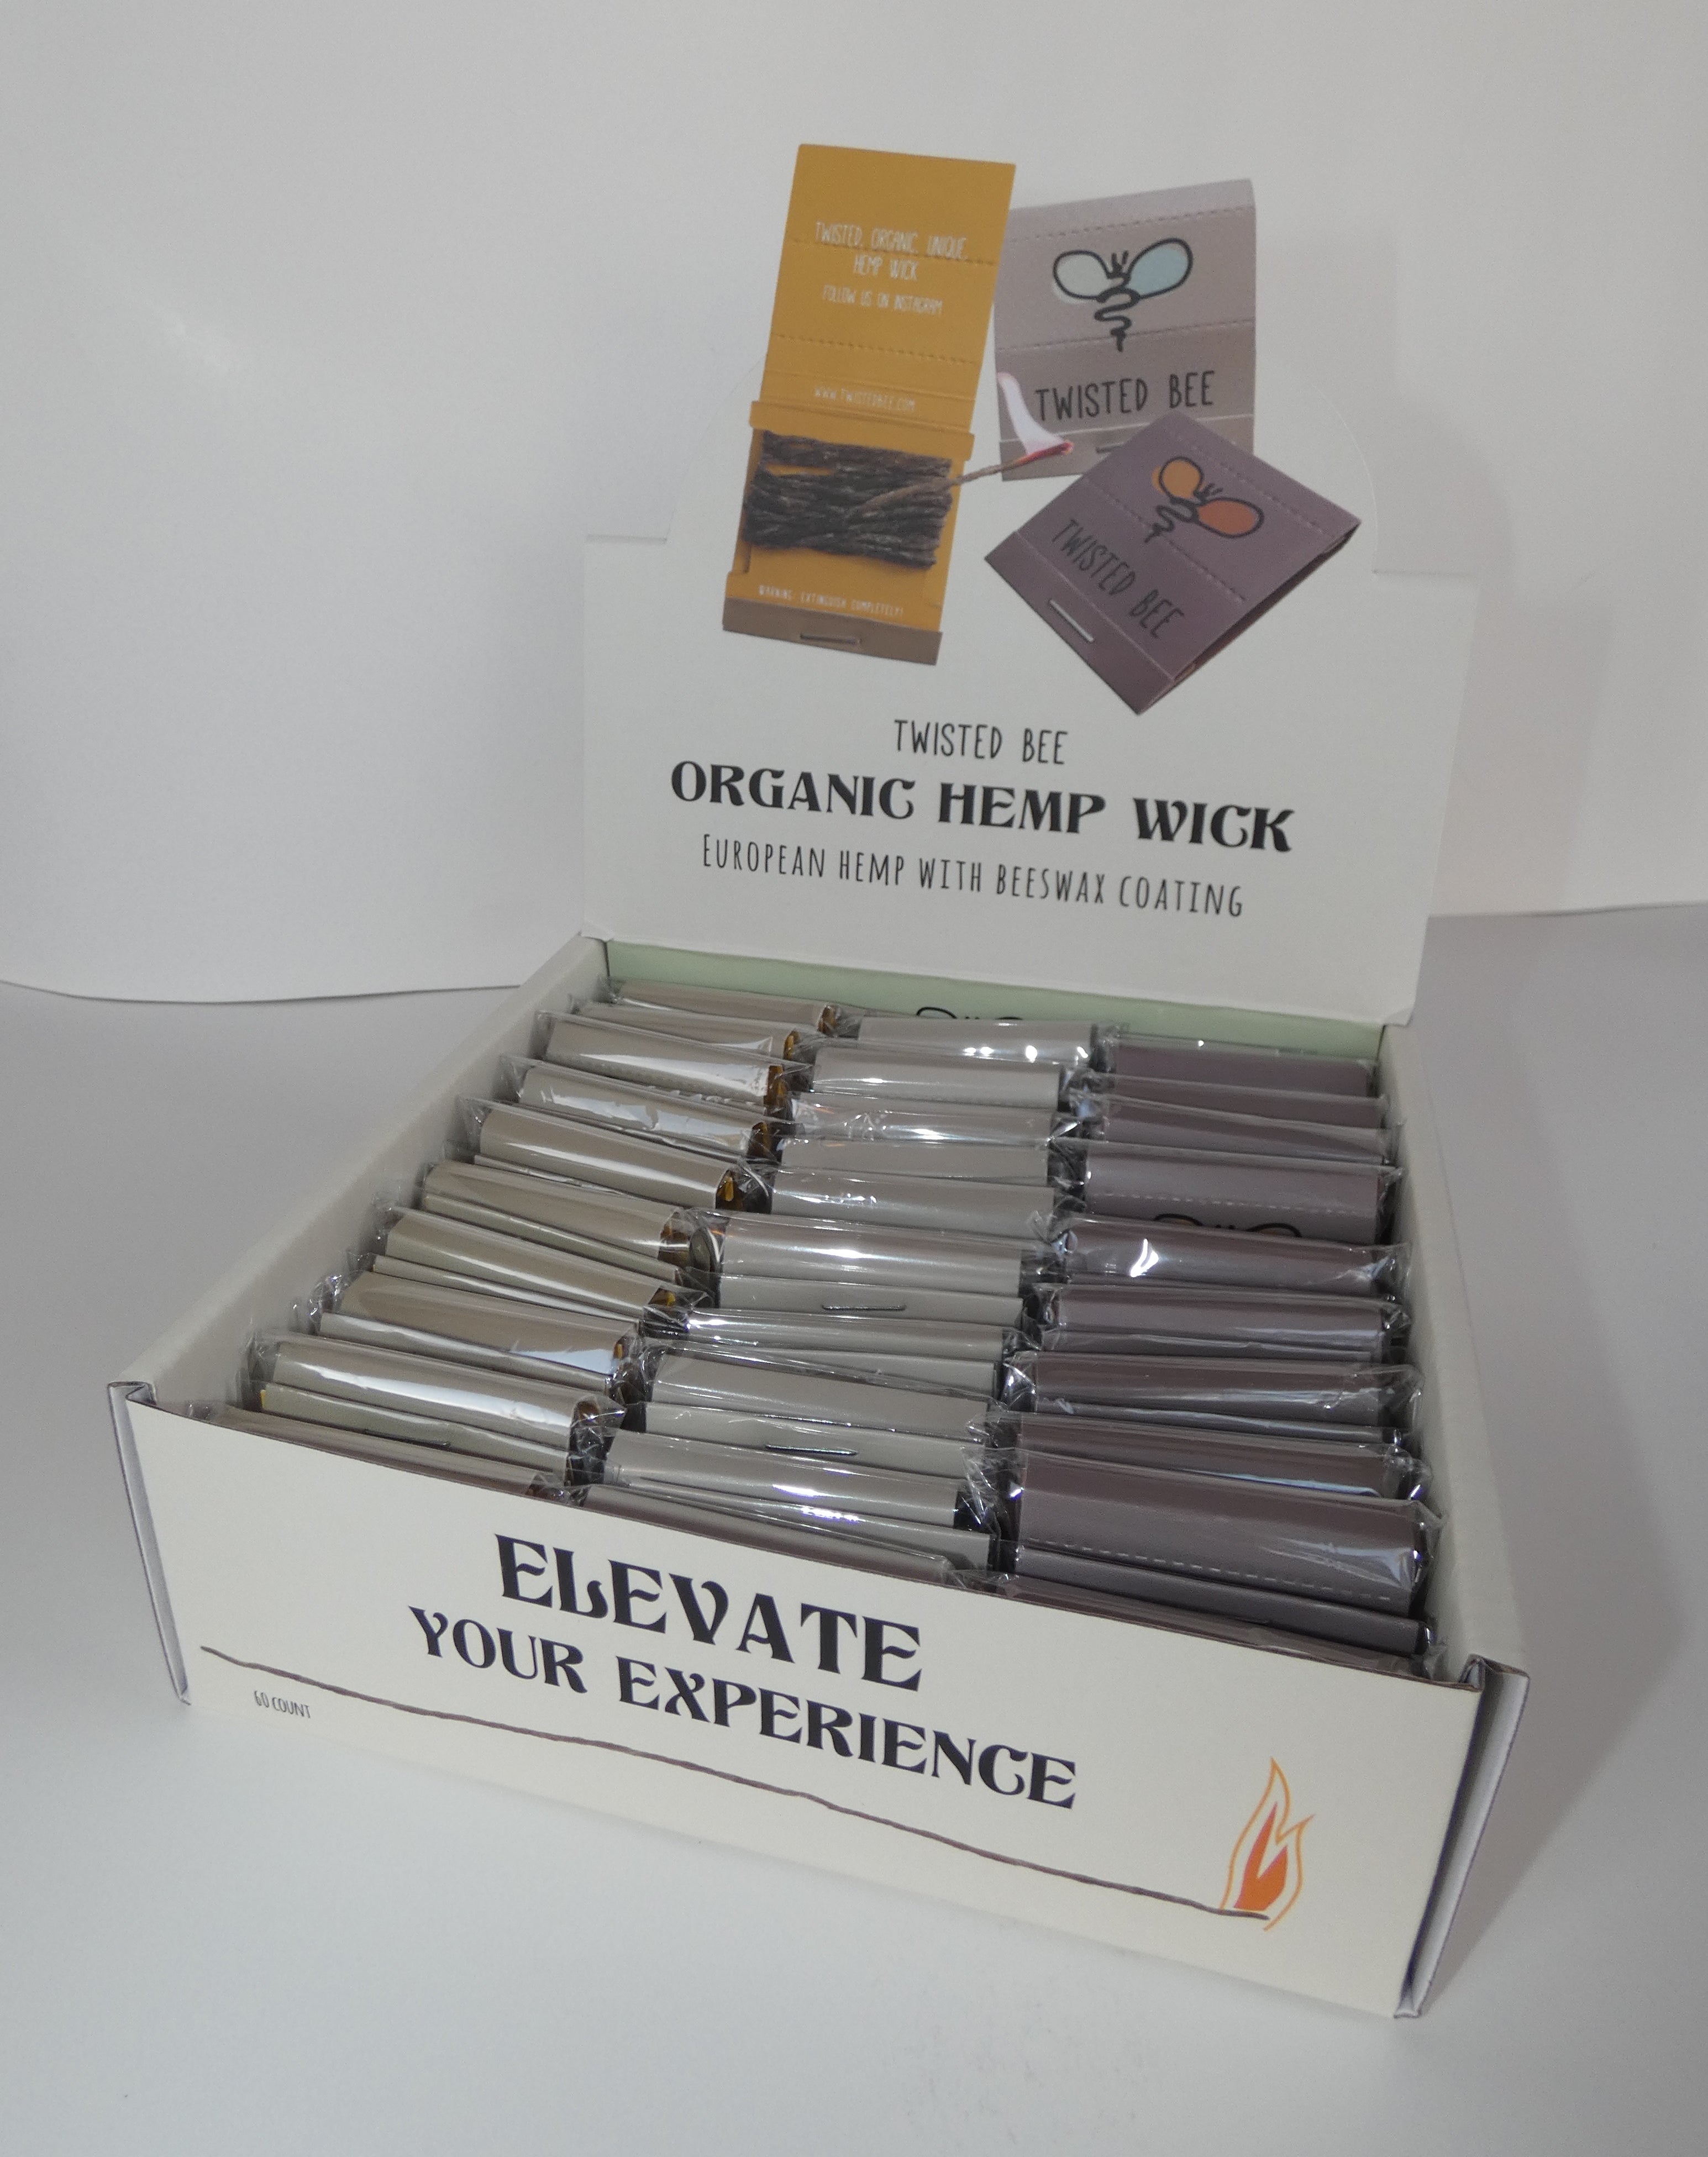 Organic Hemp Wick (60 Twisted Bee Pocket Packs) Retail Display Box